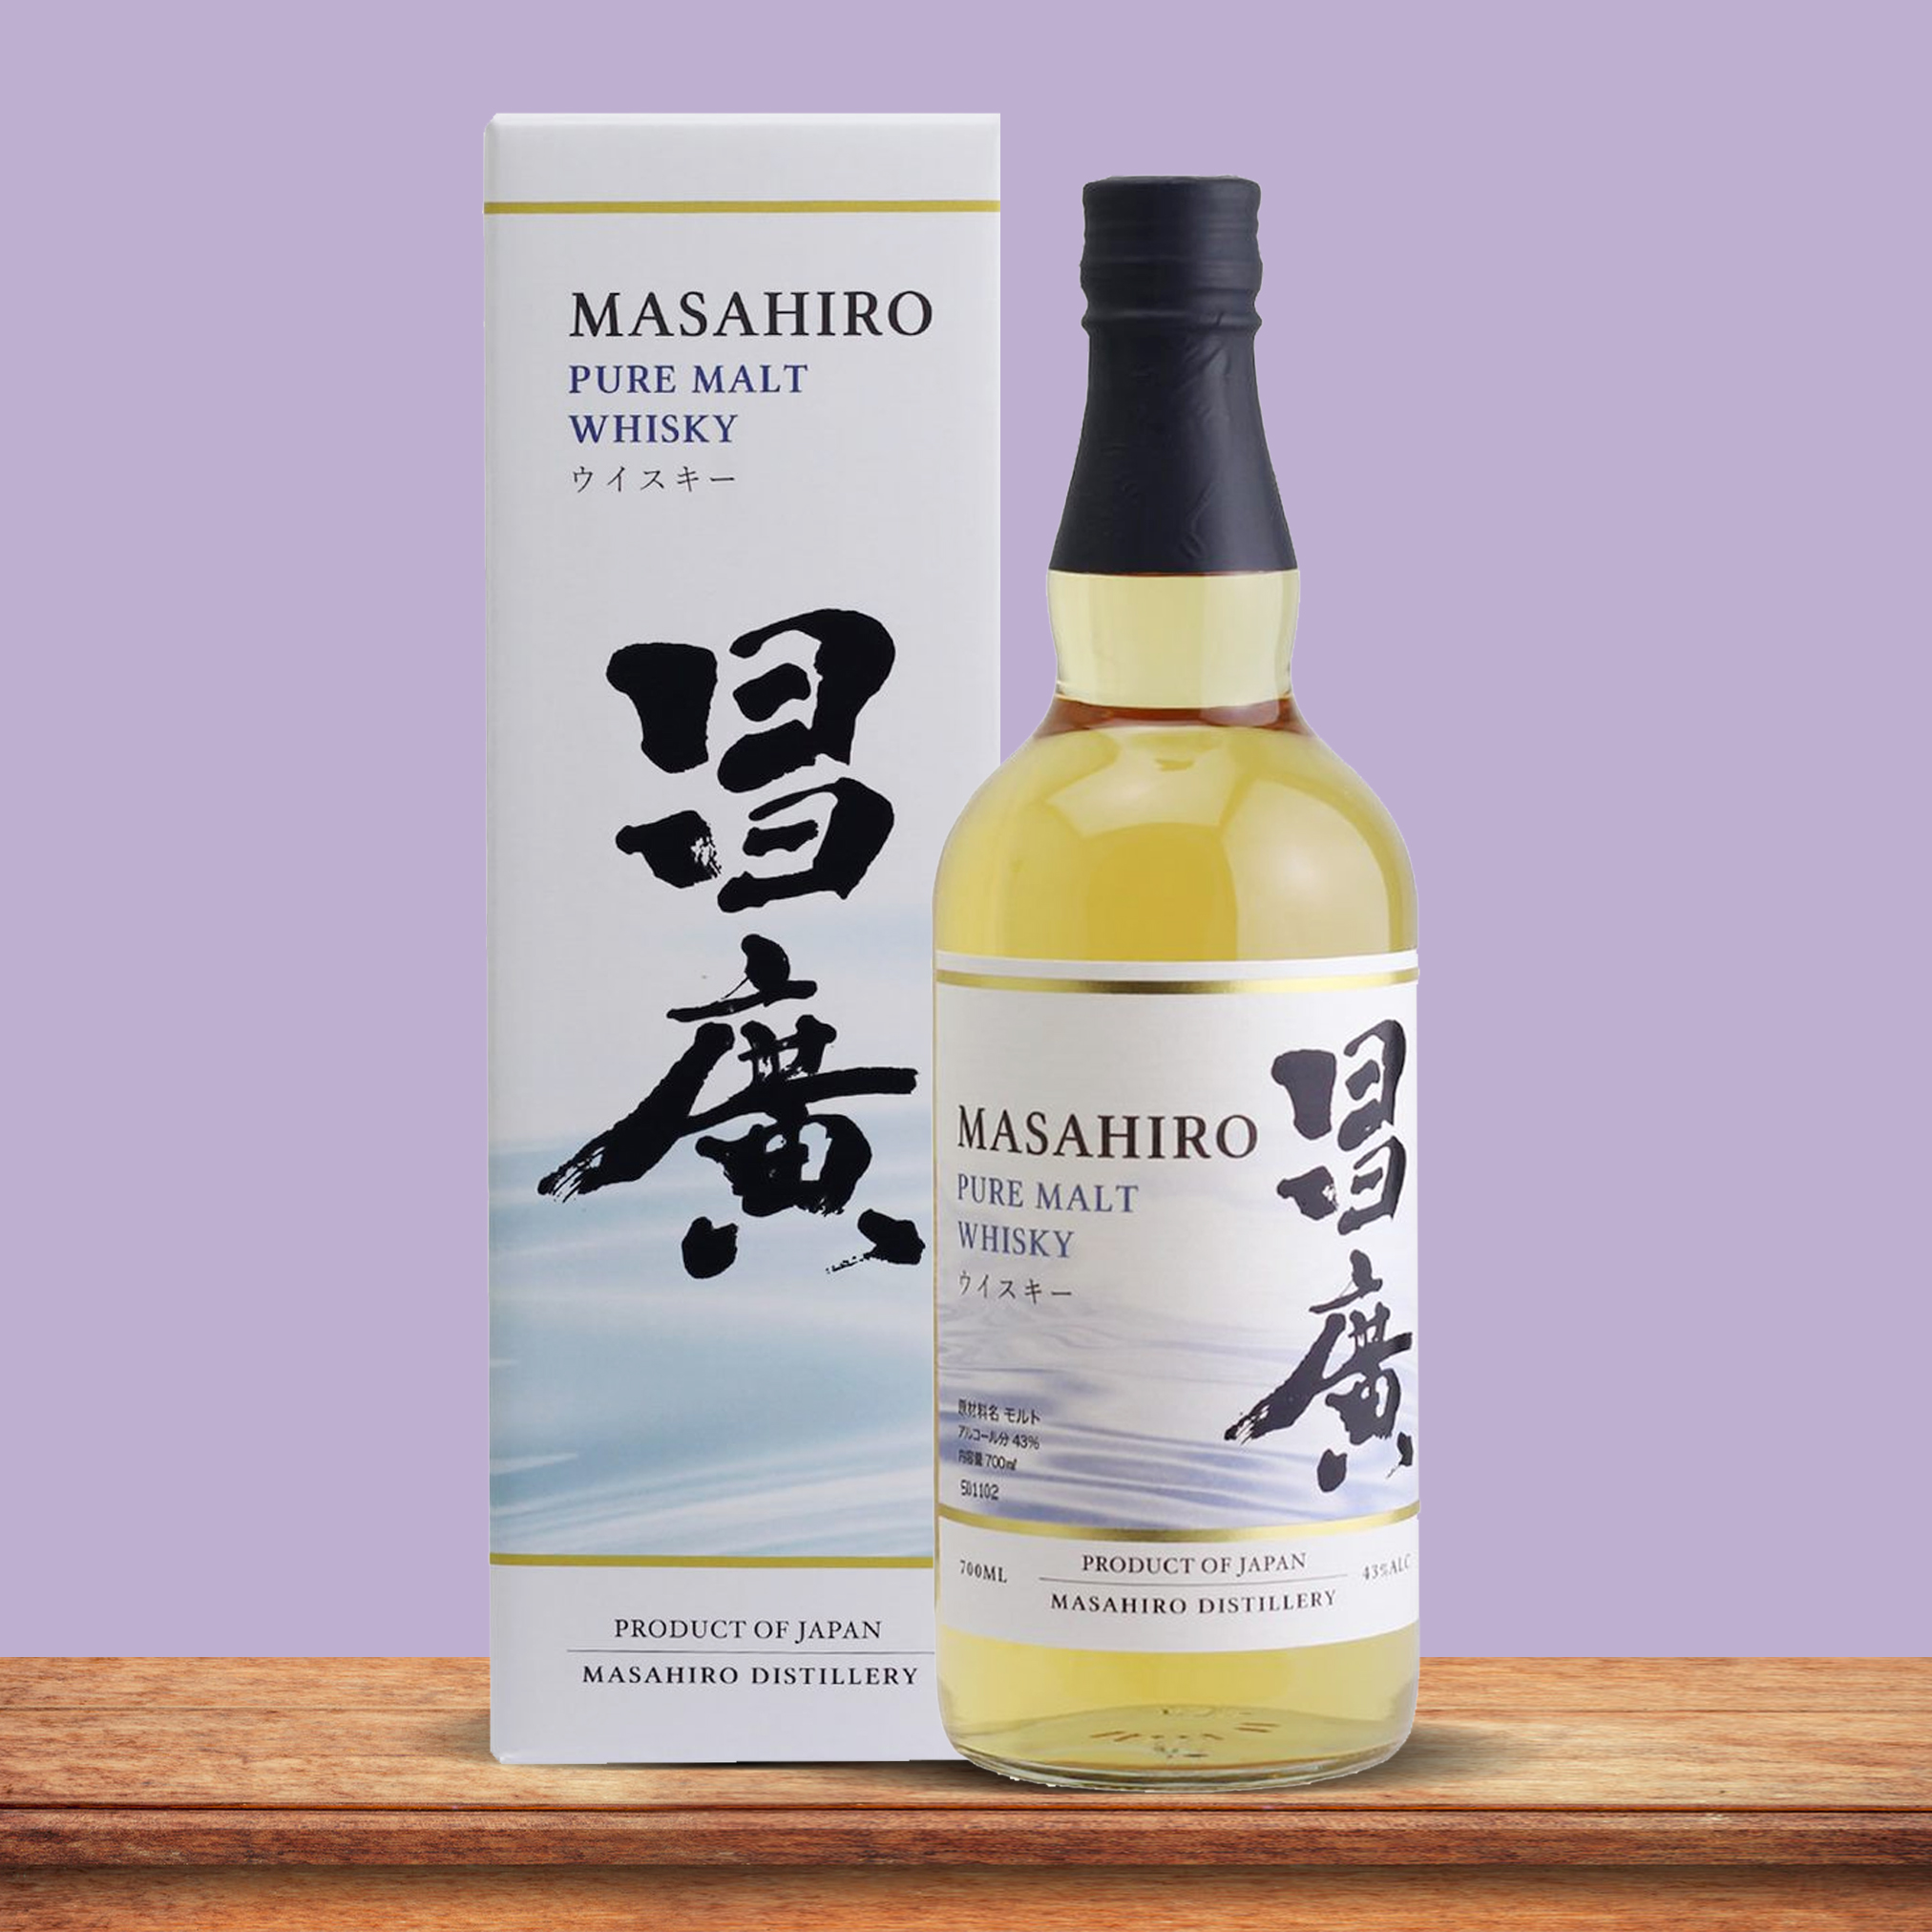 Masahiro Pure Malt Whisky 43% 700ml